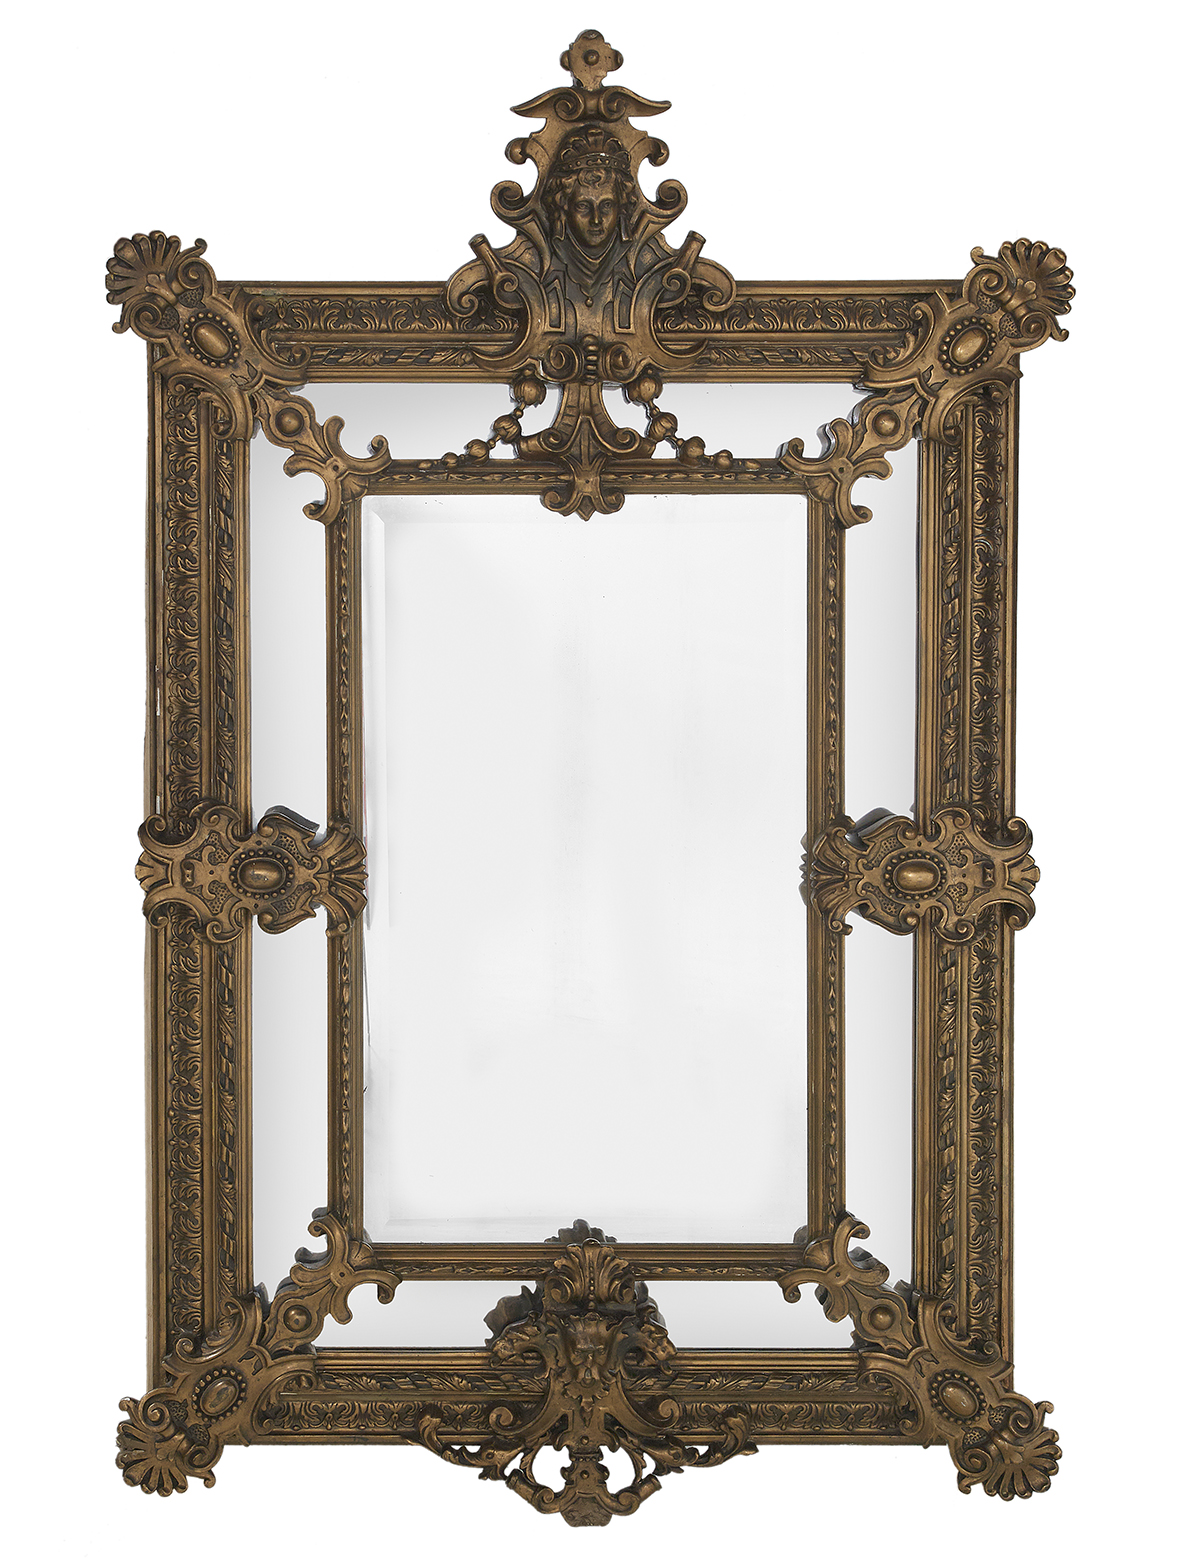 Giltwood Mirror in the Italian Baroque Taste